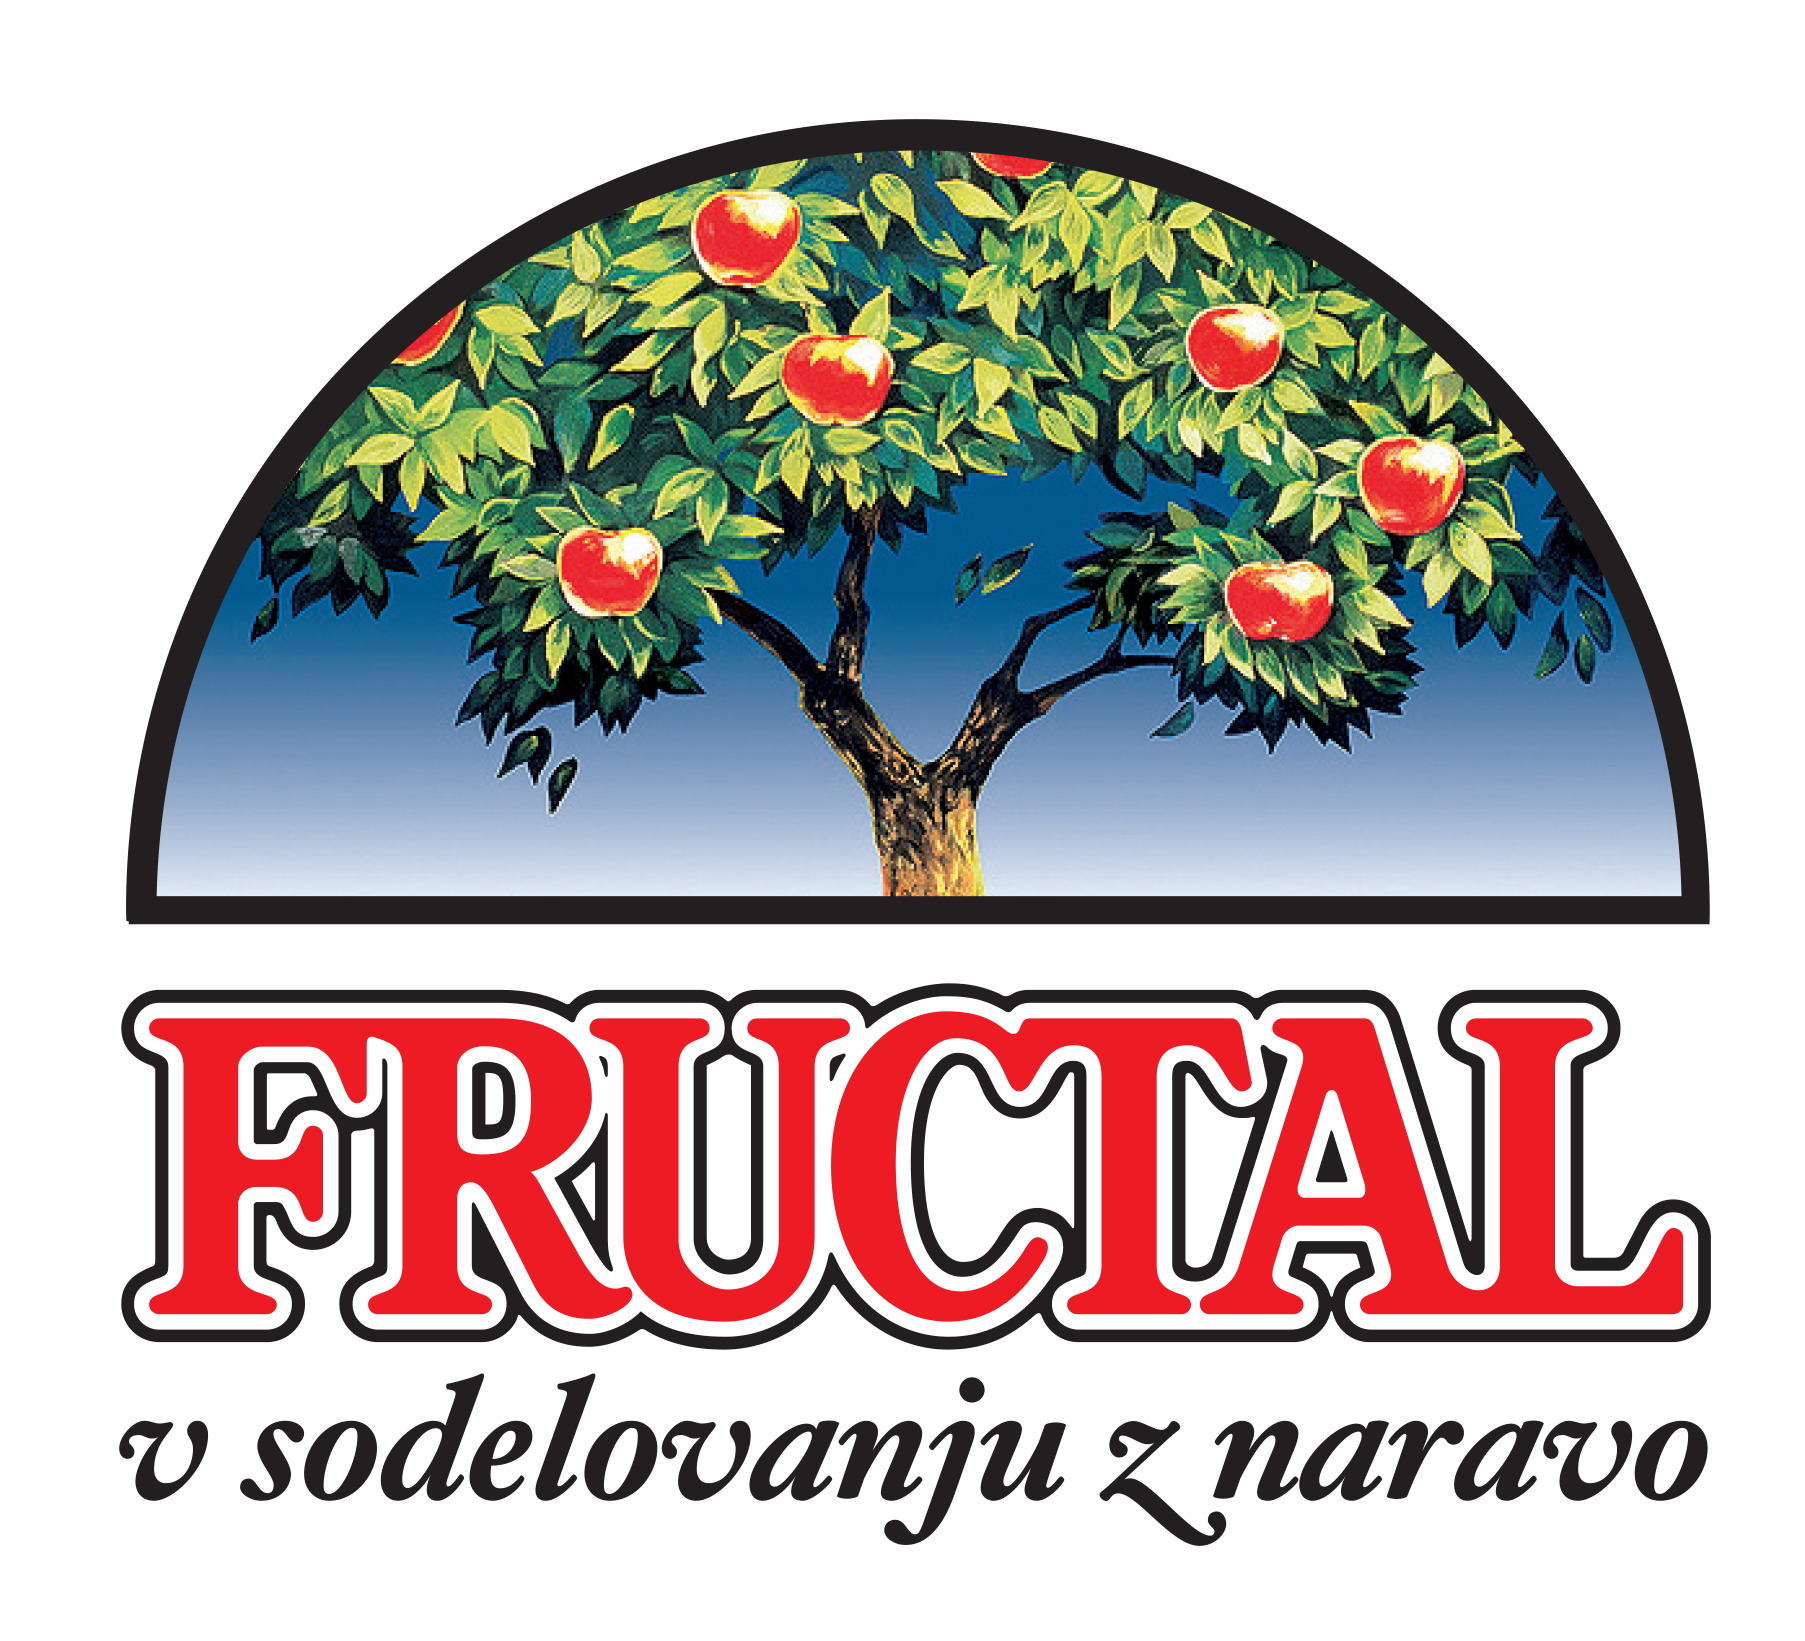 fructal